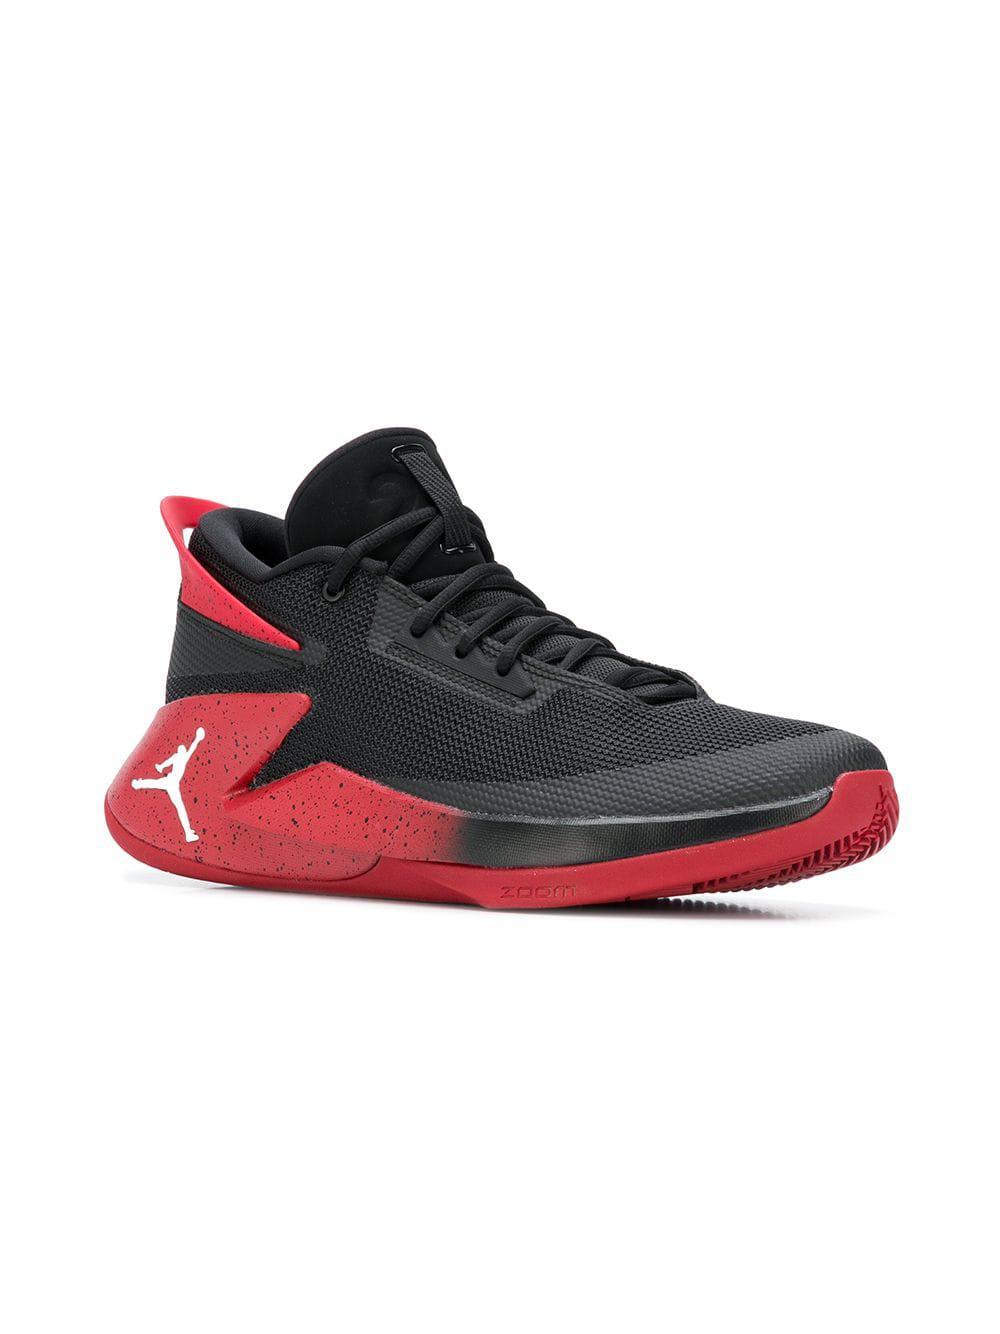 Nike Synthetic Jordan Fly Lockdown Sneakers in Black for Men - Lyst